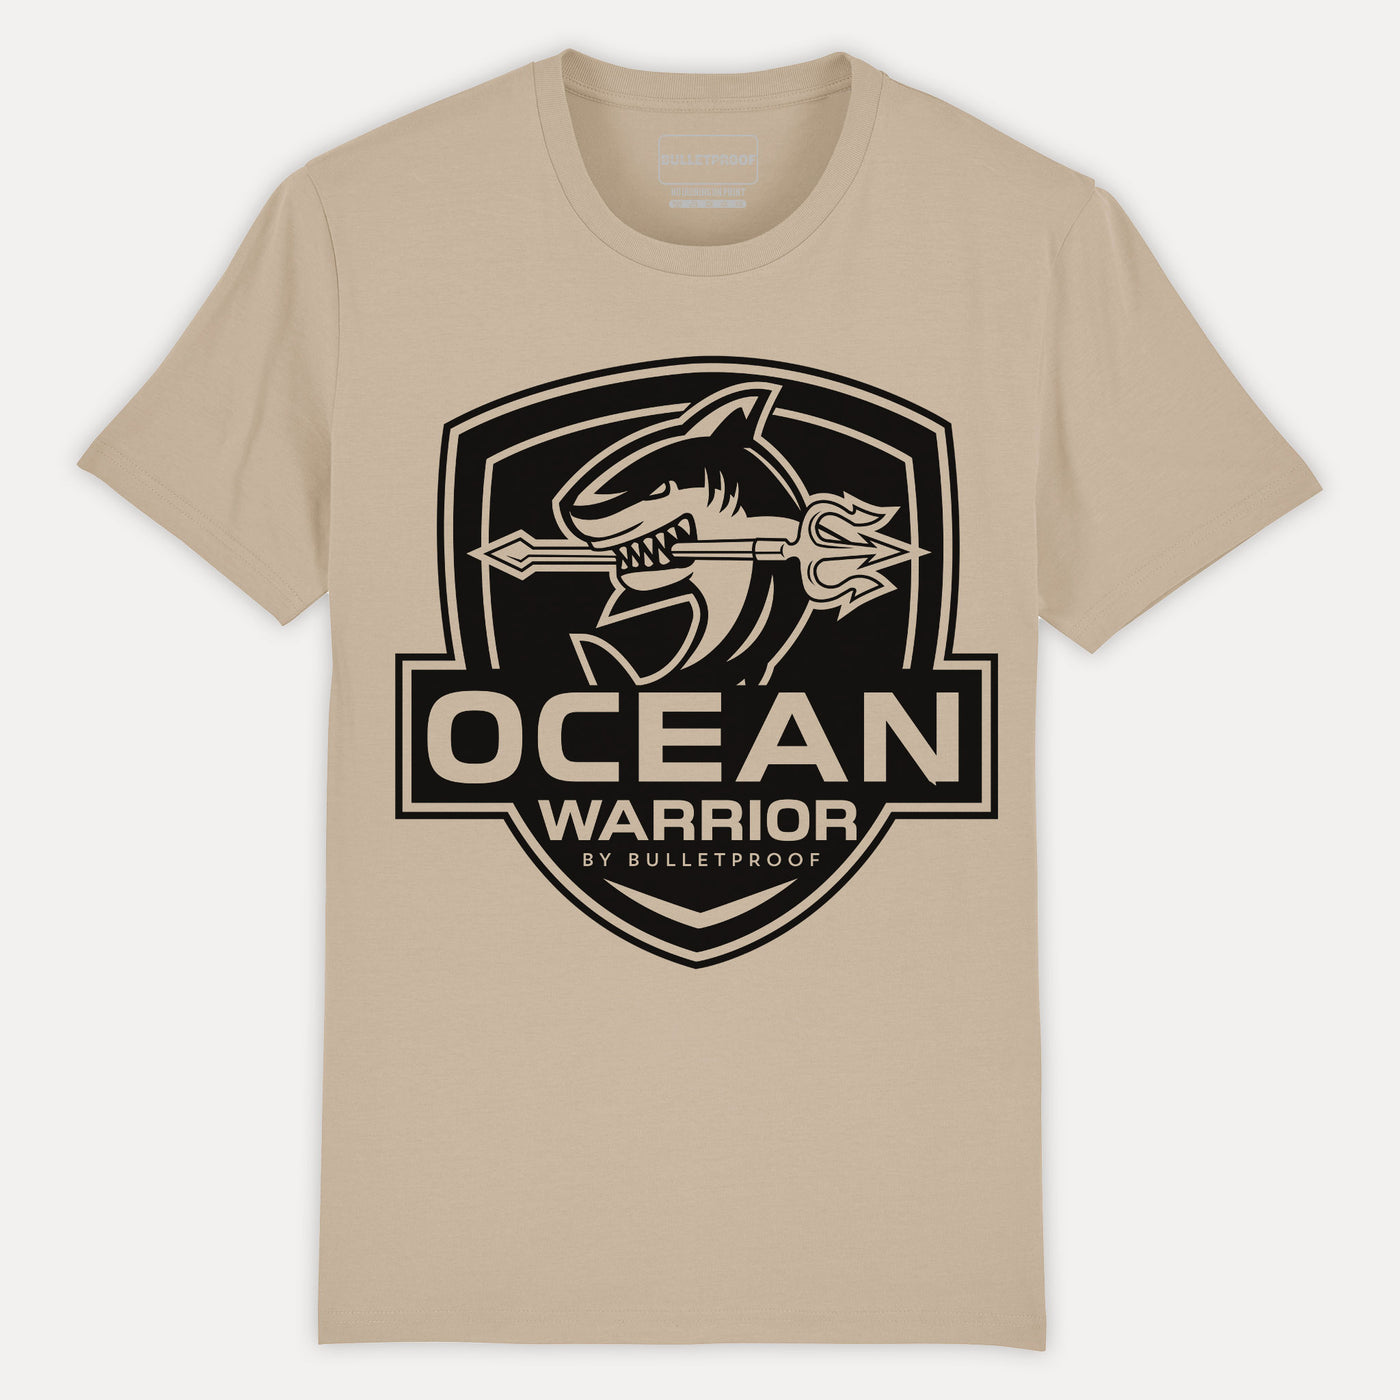 SALE Bulletproof Ocean Warrior T-Shirt